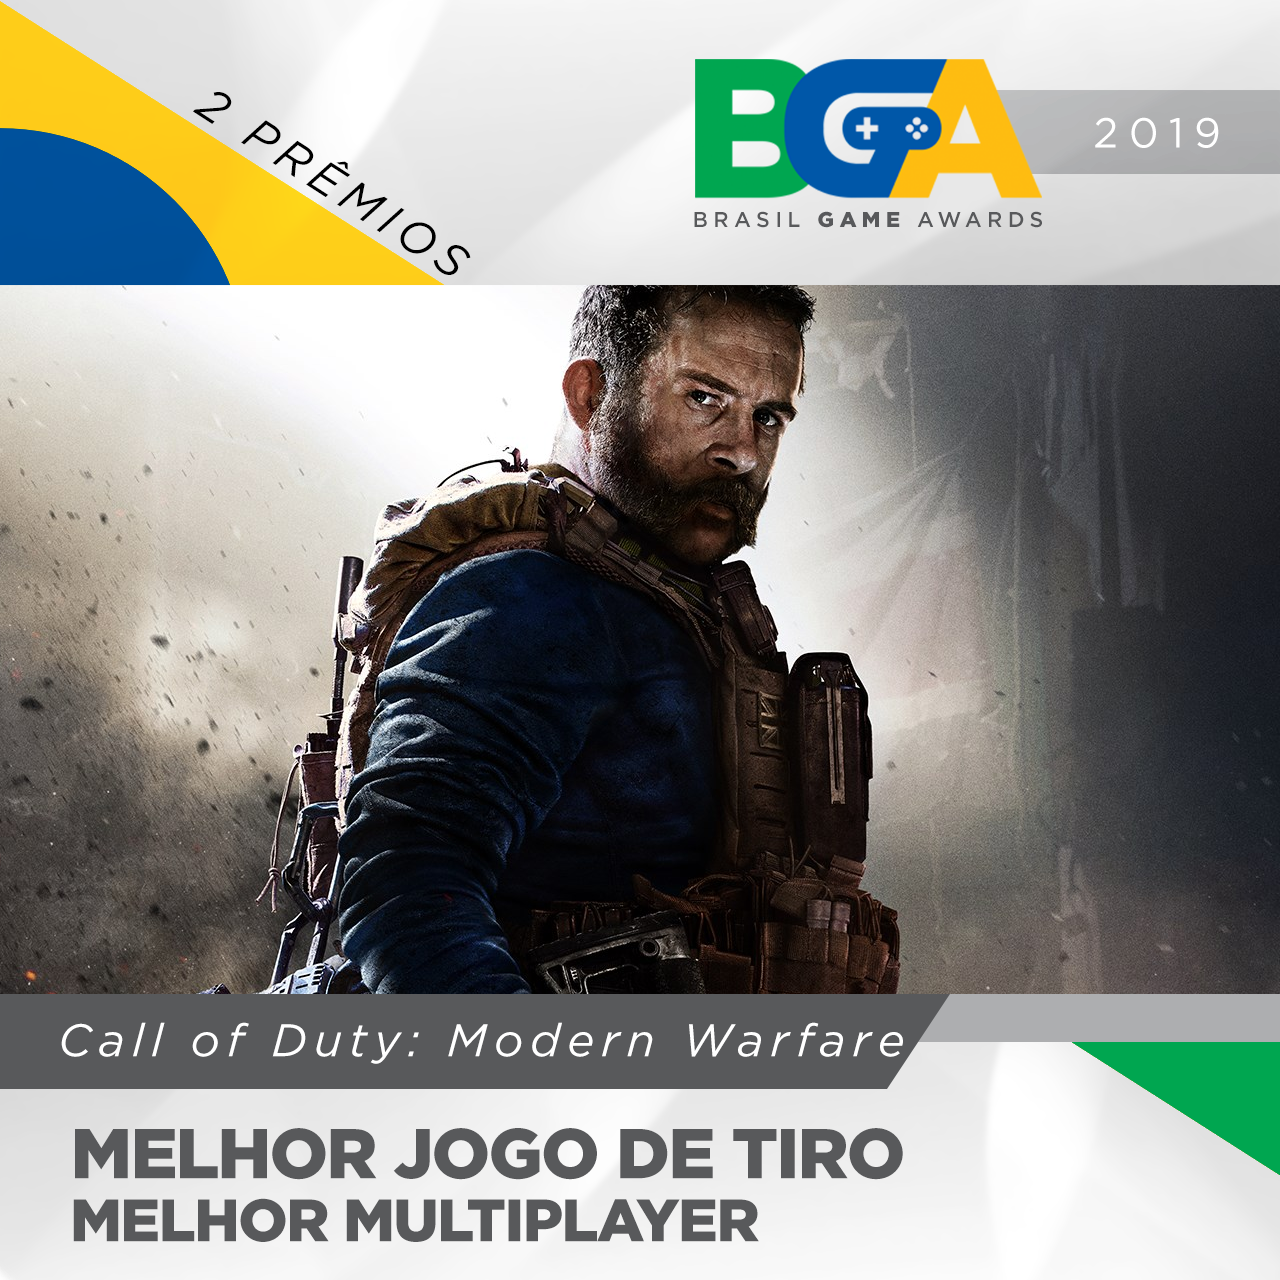 bgawards – Brazil Game Awards